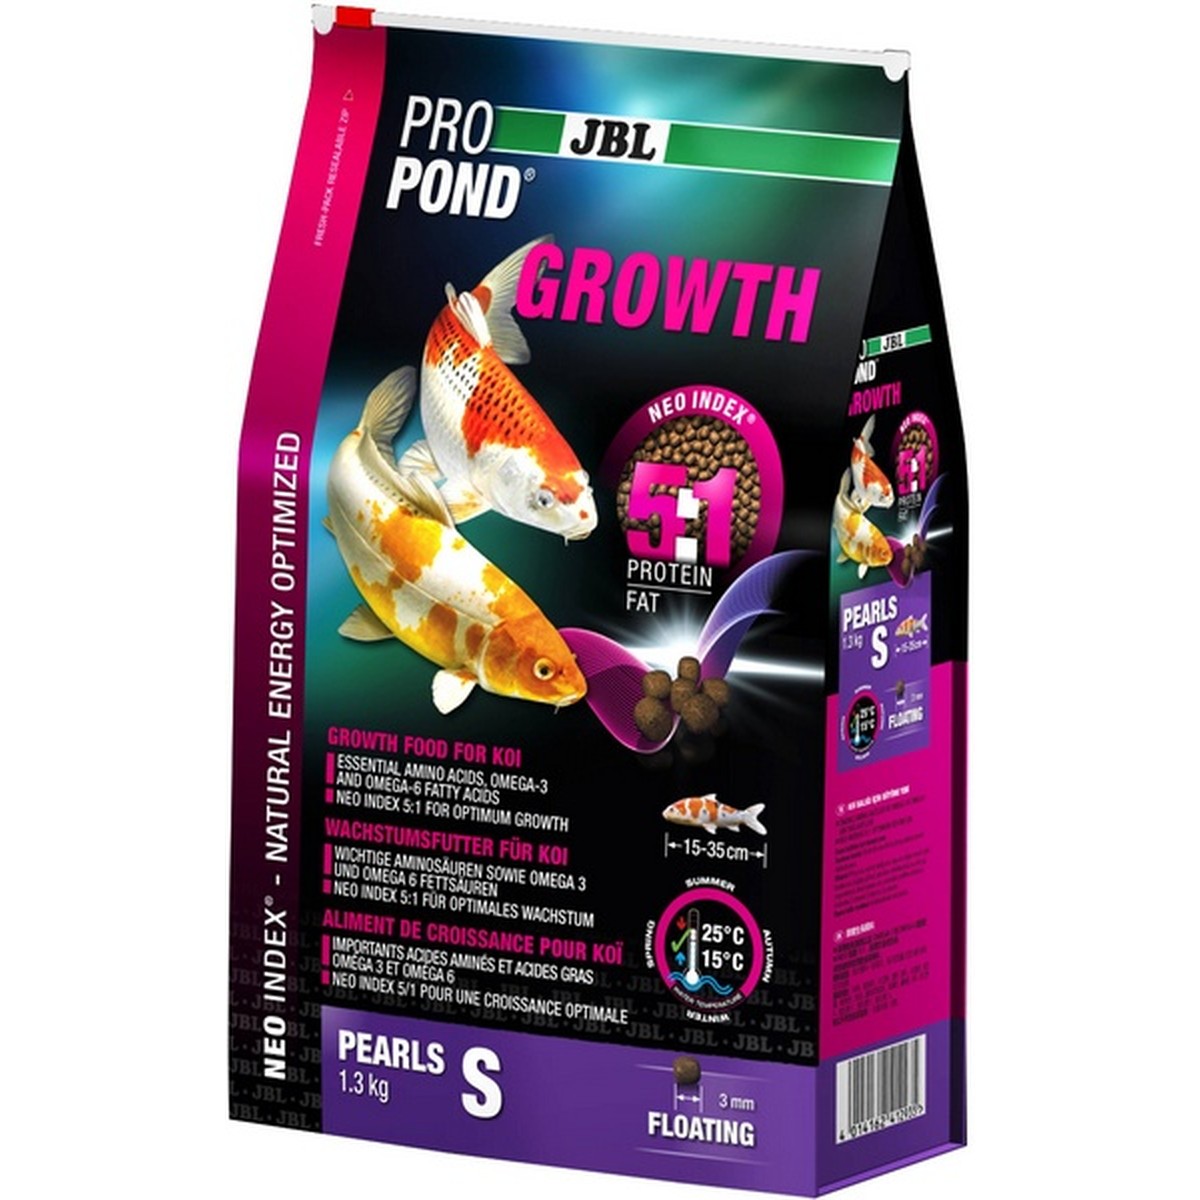   JBL ProPond Growth S, 1,3 kg  1.3kg